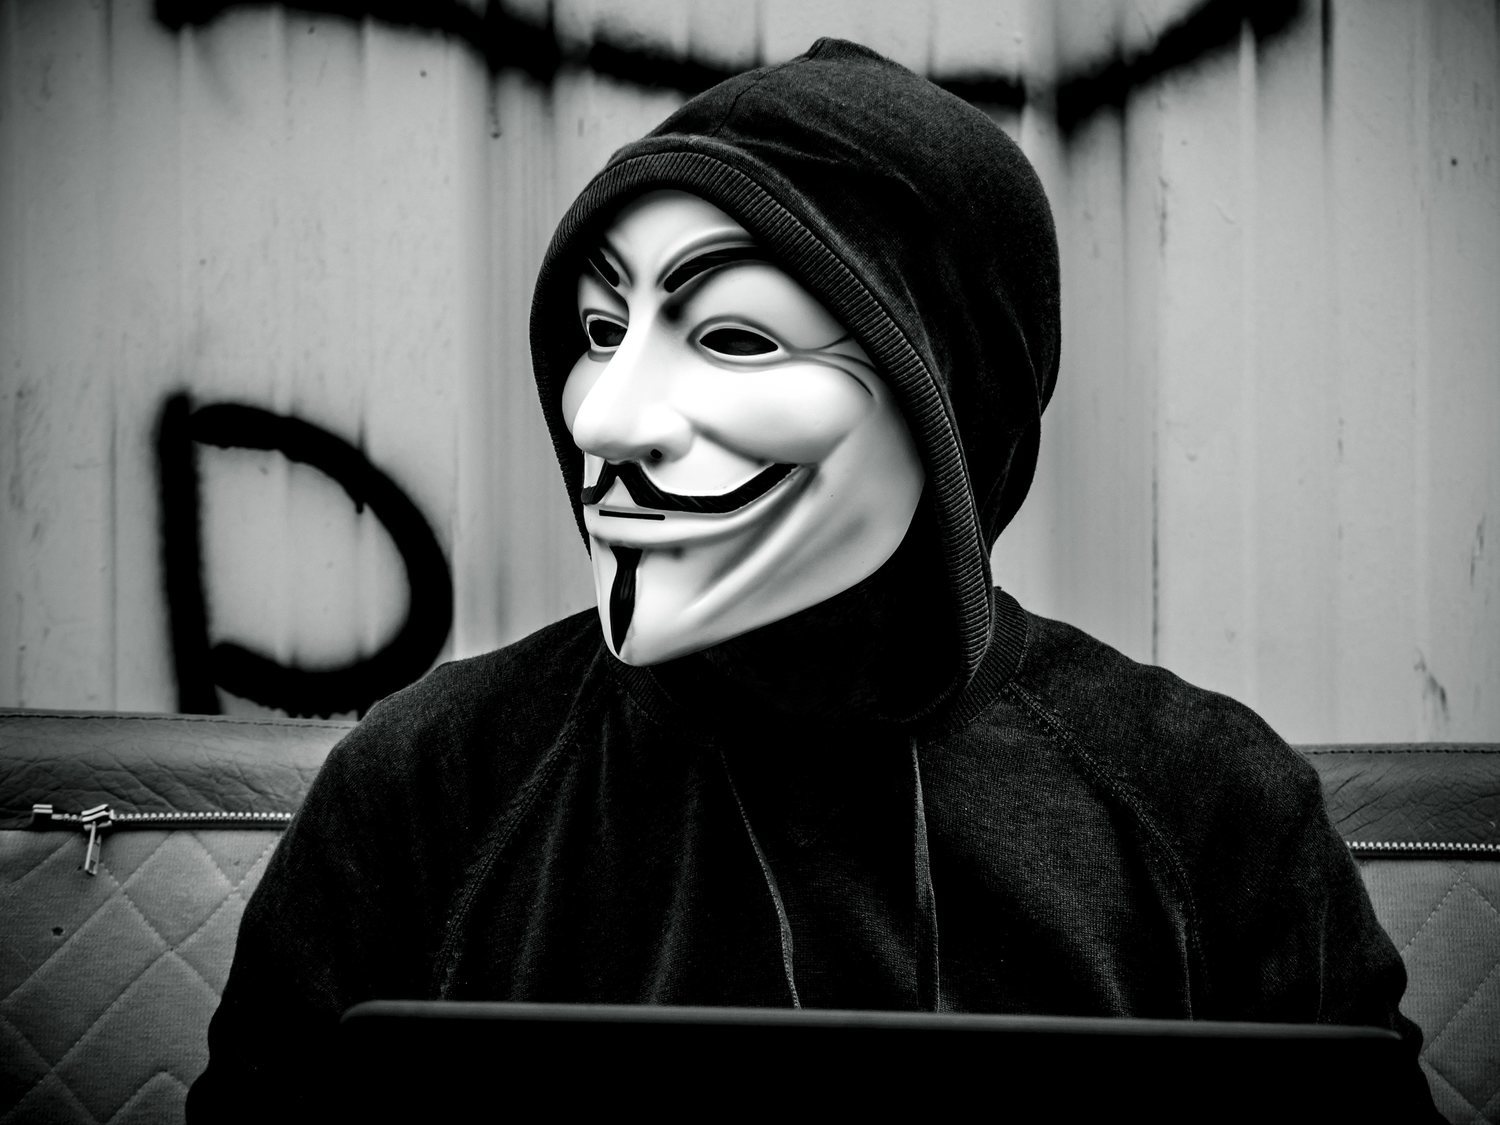 Anonymous amenaza con la llegada de una revolución : "¡Liberen a Assange o lo pagarán!"